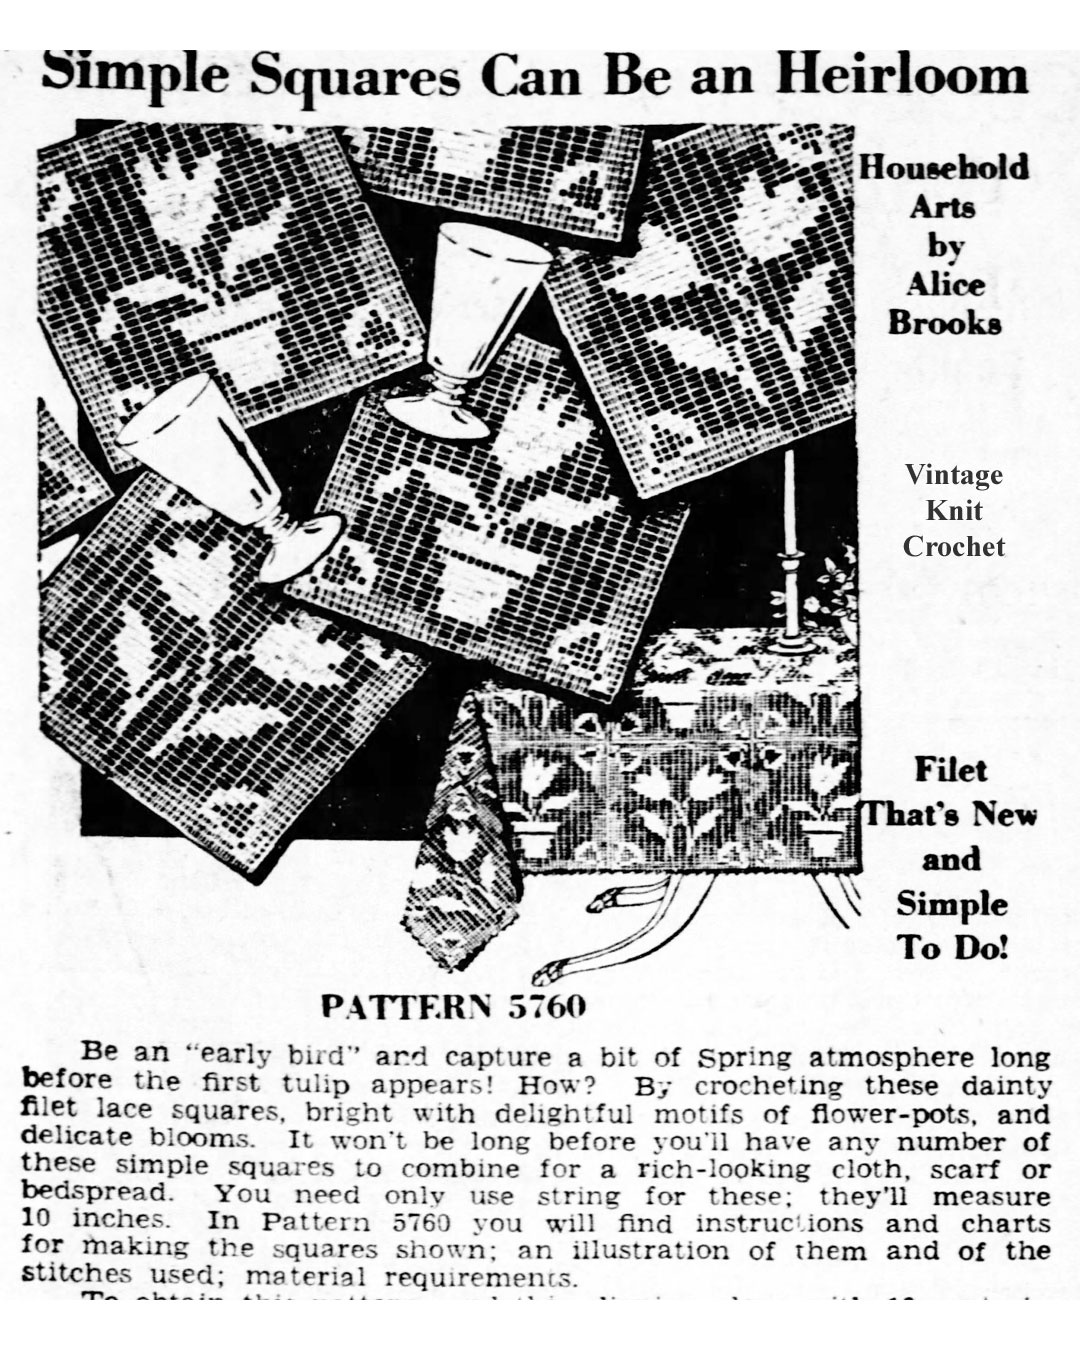 Filet Crochet Tulip Squares Pattern, Alice Brooks Design 5760 Newspaper Advertisement 